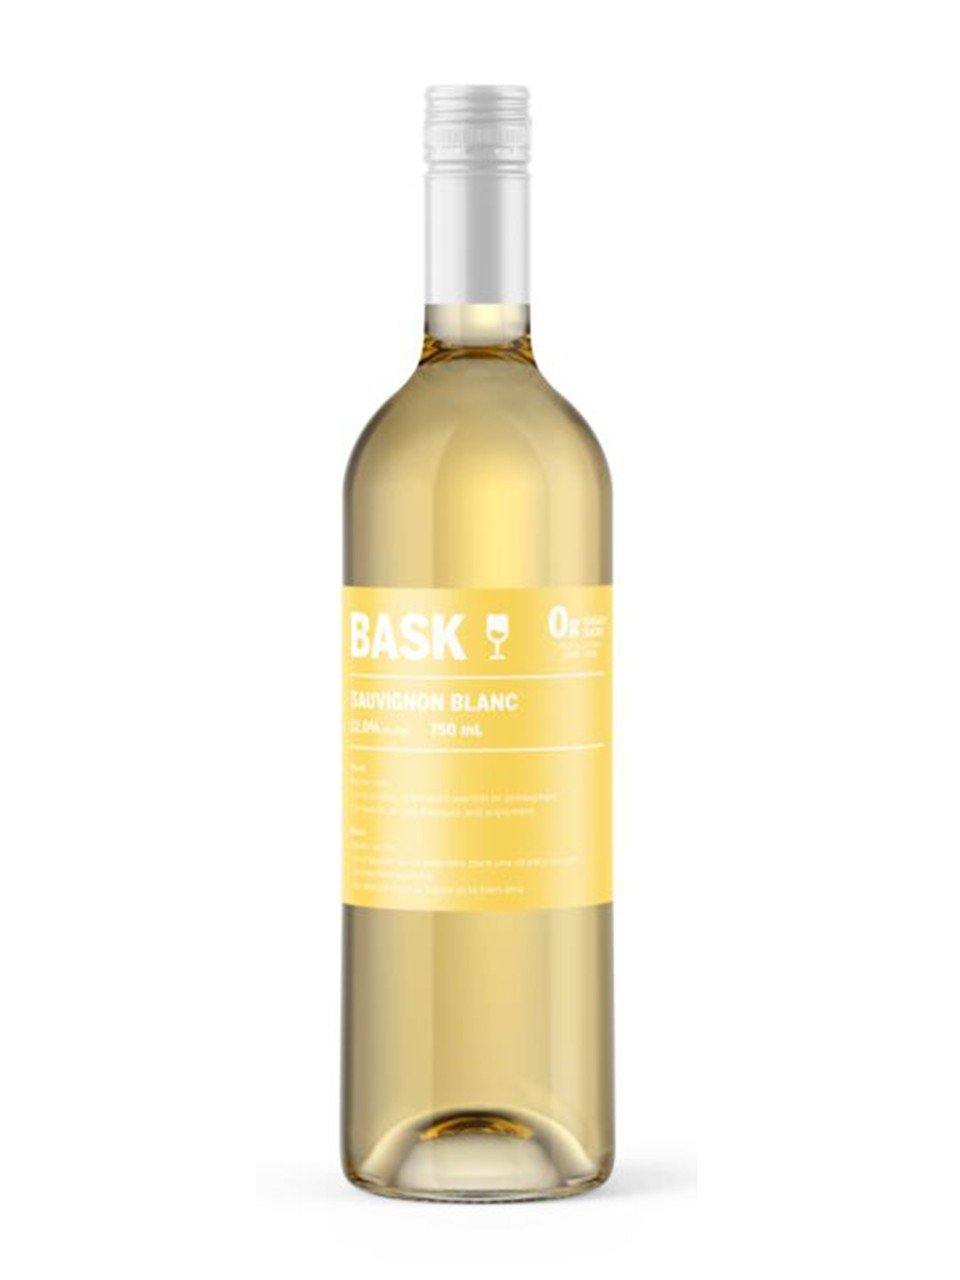 Bask Sauvignon Blanc 750 mL bottle - Speedy Booze